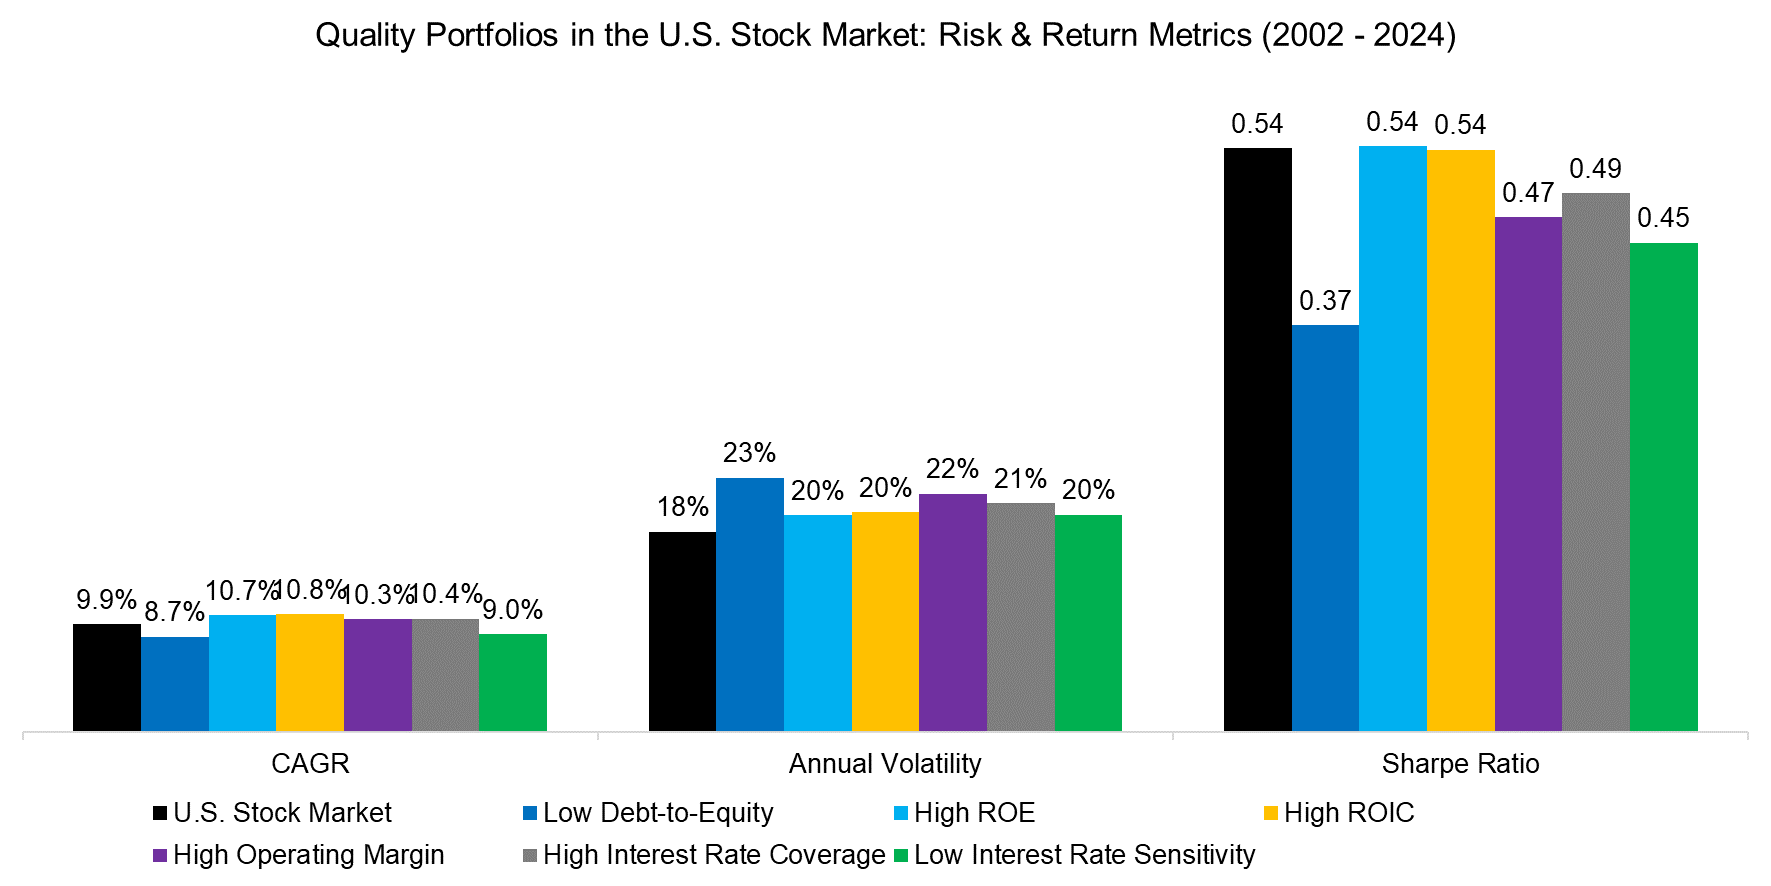 Quality Portfolios in the U.S. Stock Market Risk & Return Metrics (2002 - 2024)